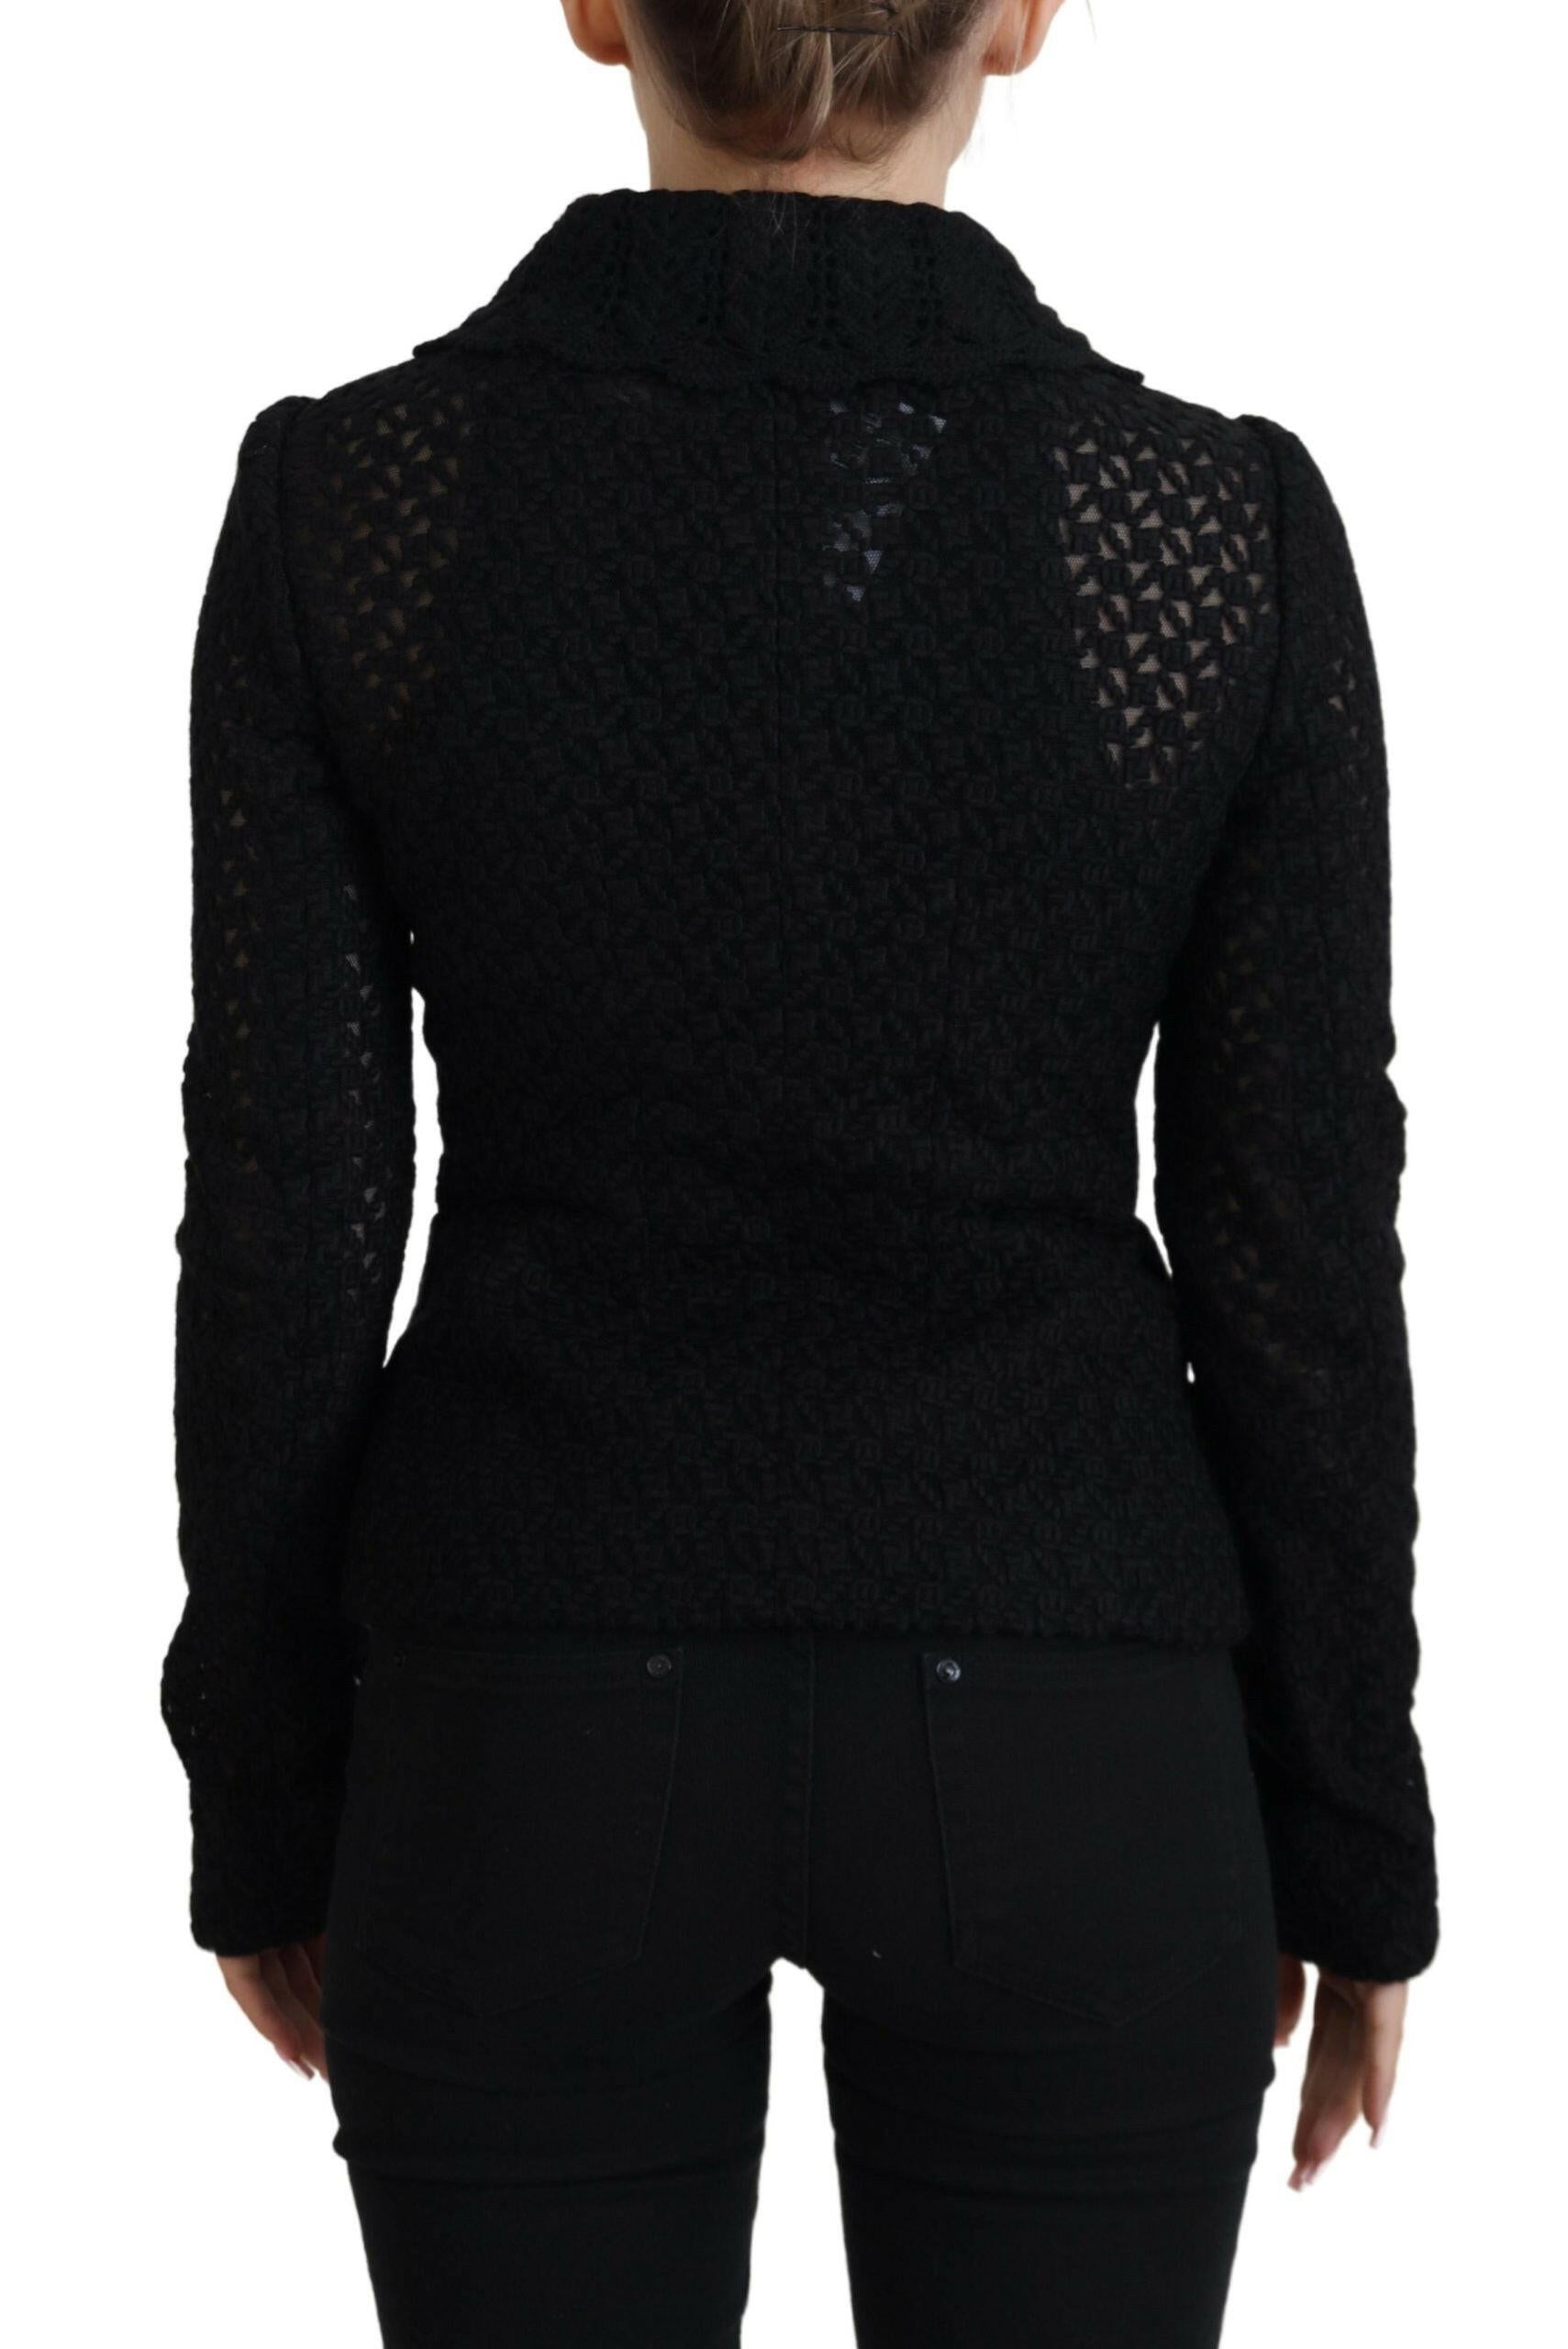 Dolce & Gabbana Black Wool Knitted Button Down Collar Jacket - GENUINE AUTHENTIC BRAND LLC  